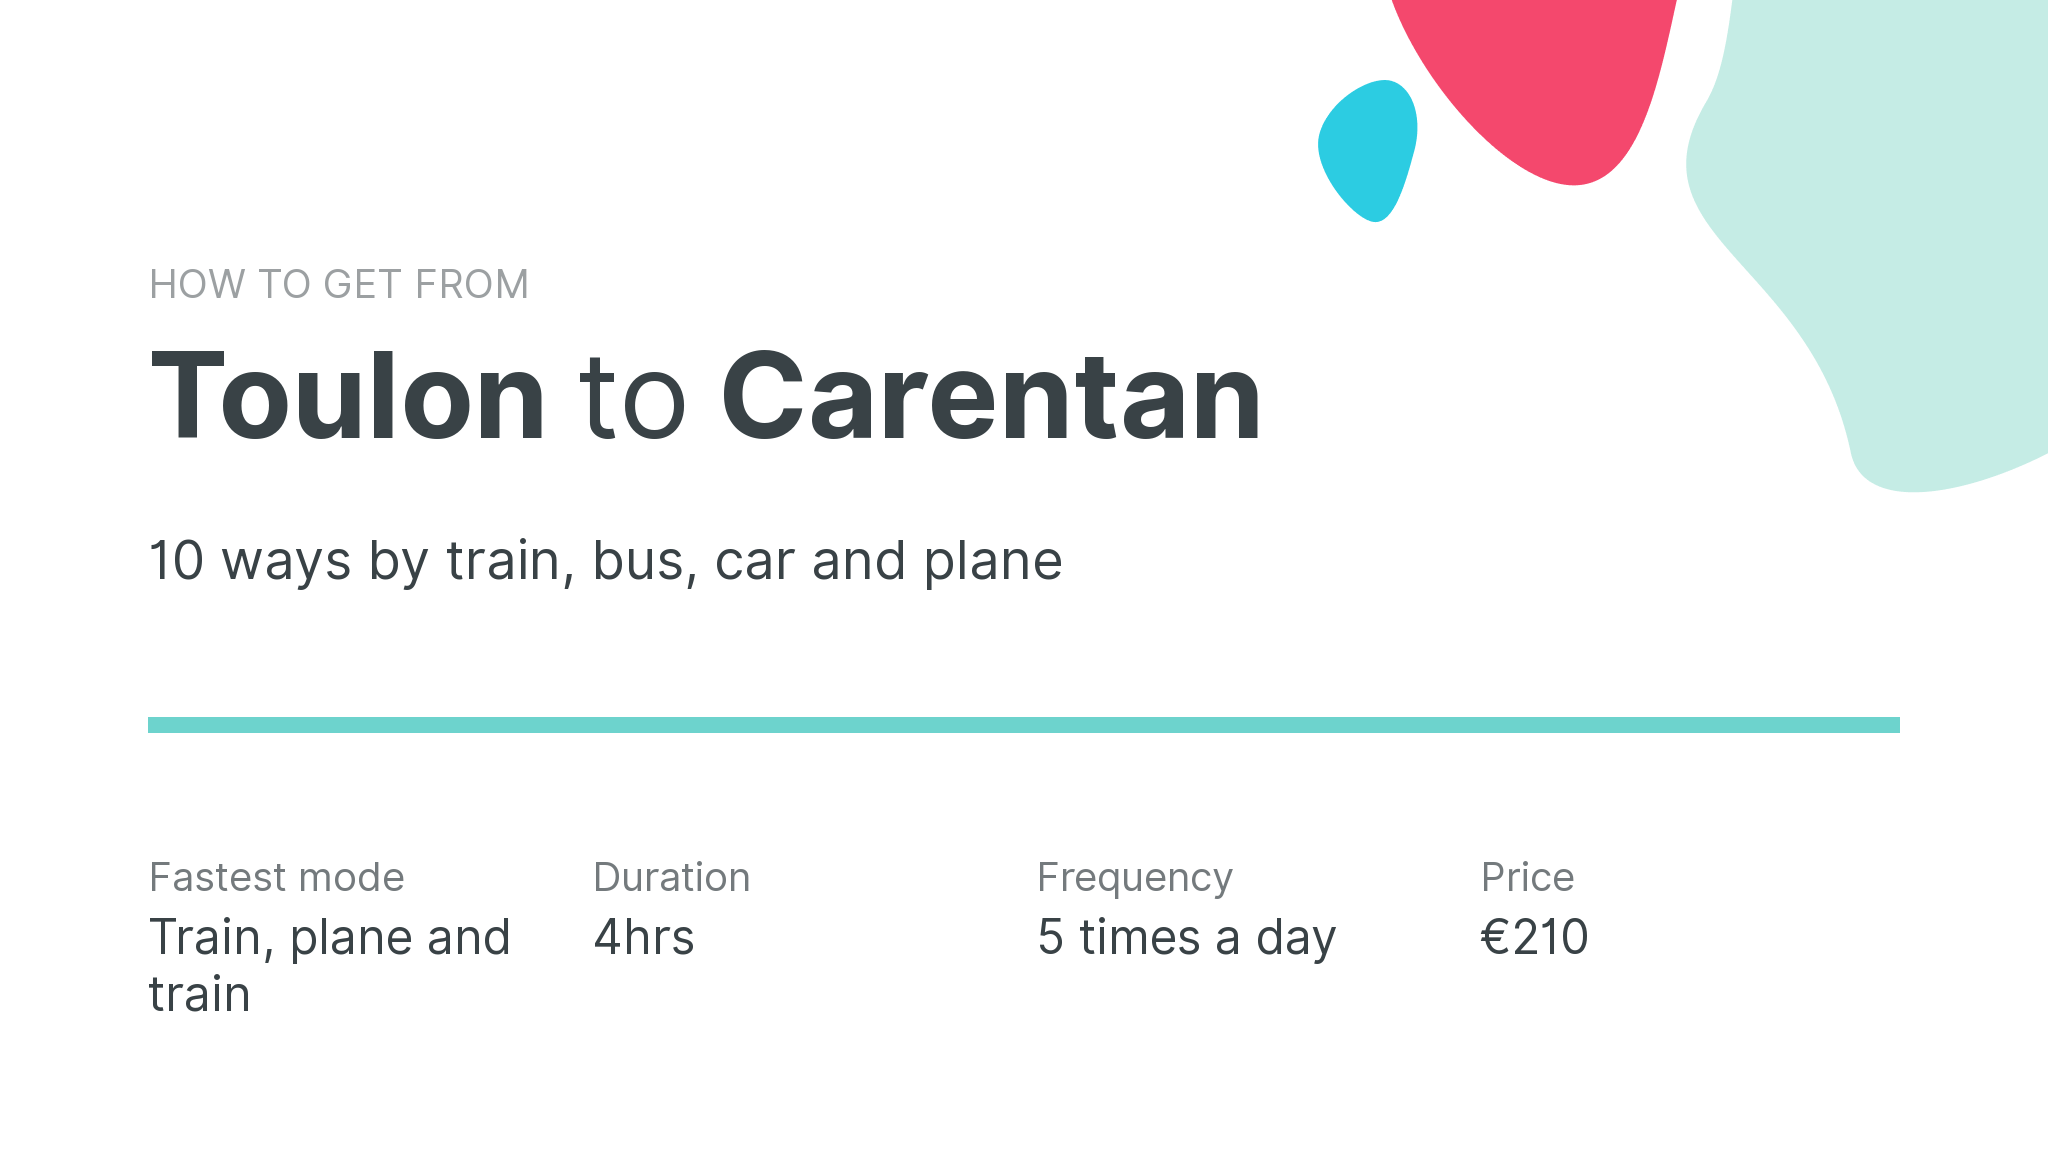 How do I get from Toulon to Carentan